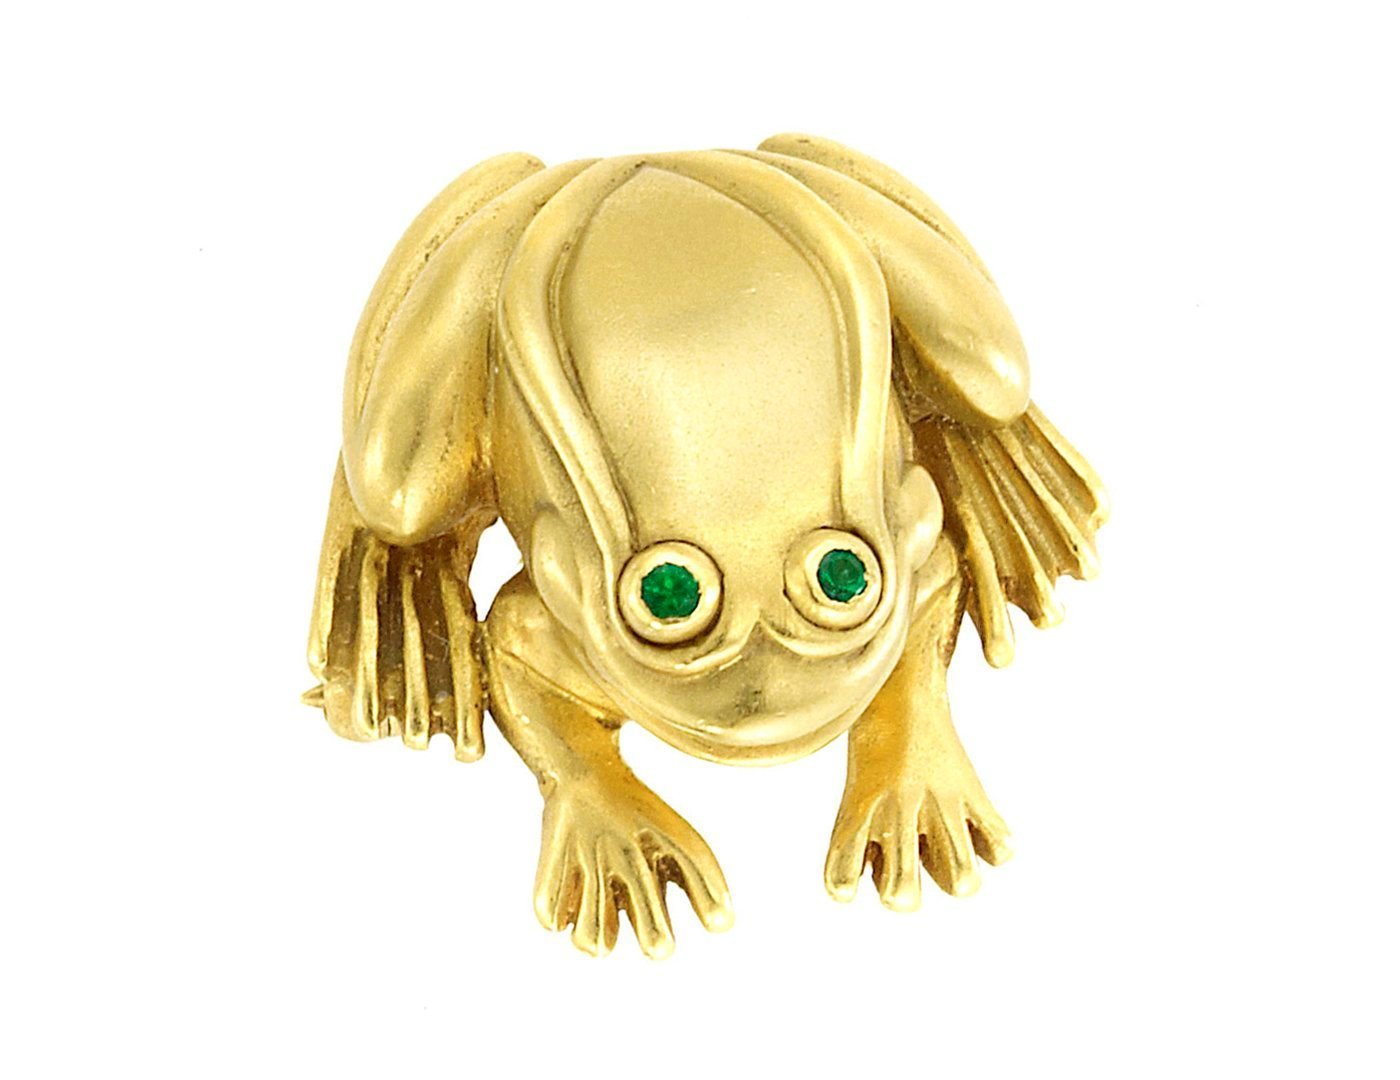 Barry Kieselstein-Cord 18K Gold Frog Pin Brooch - DSF Antique Jewelry